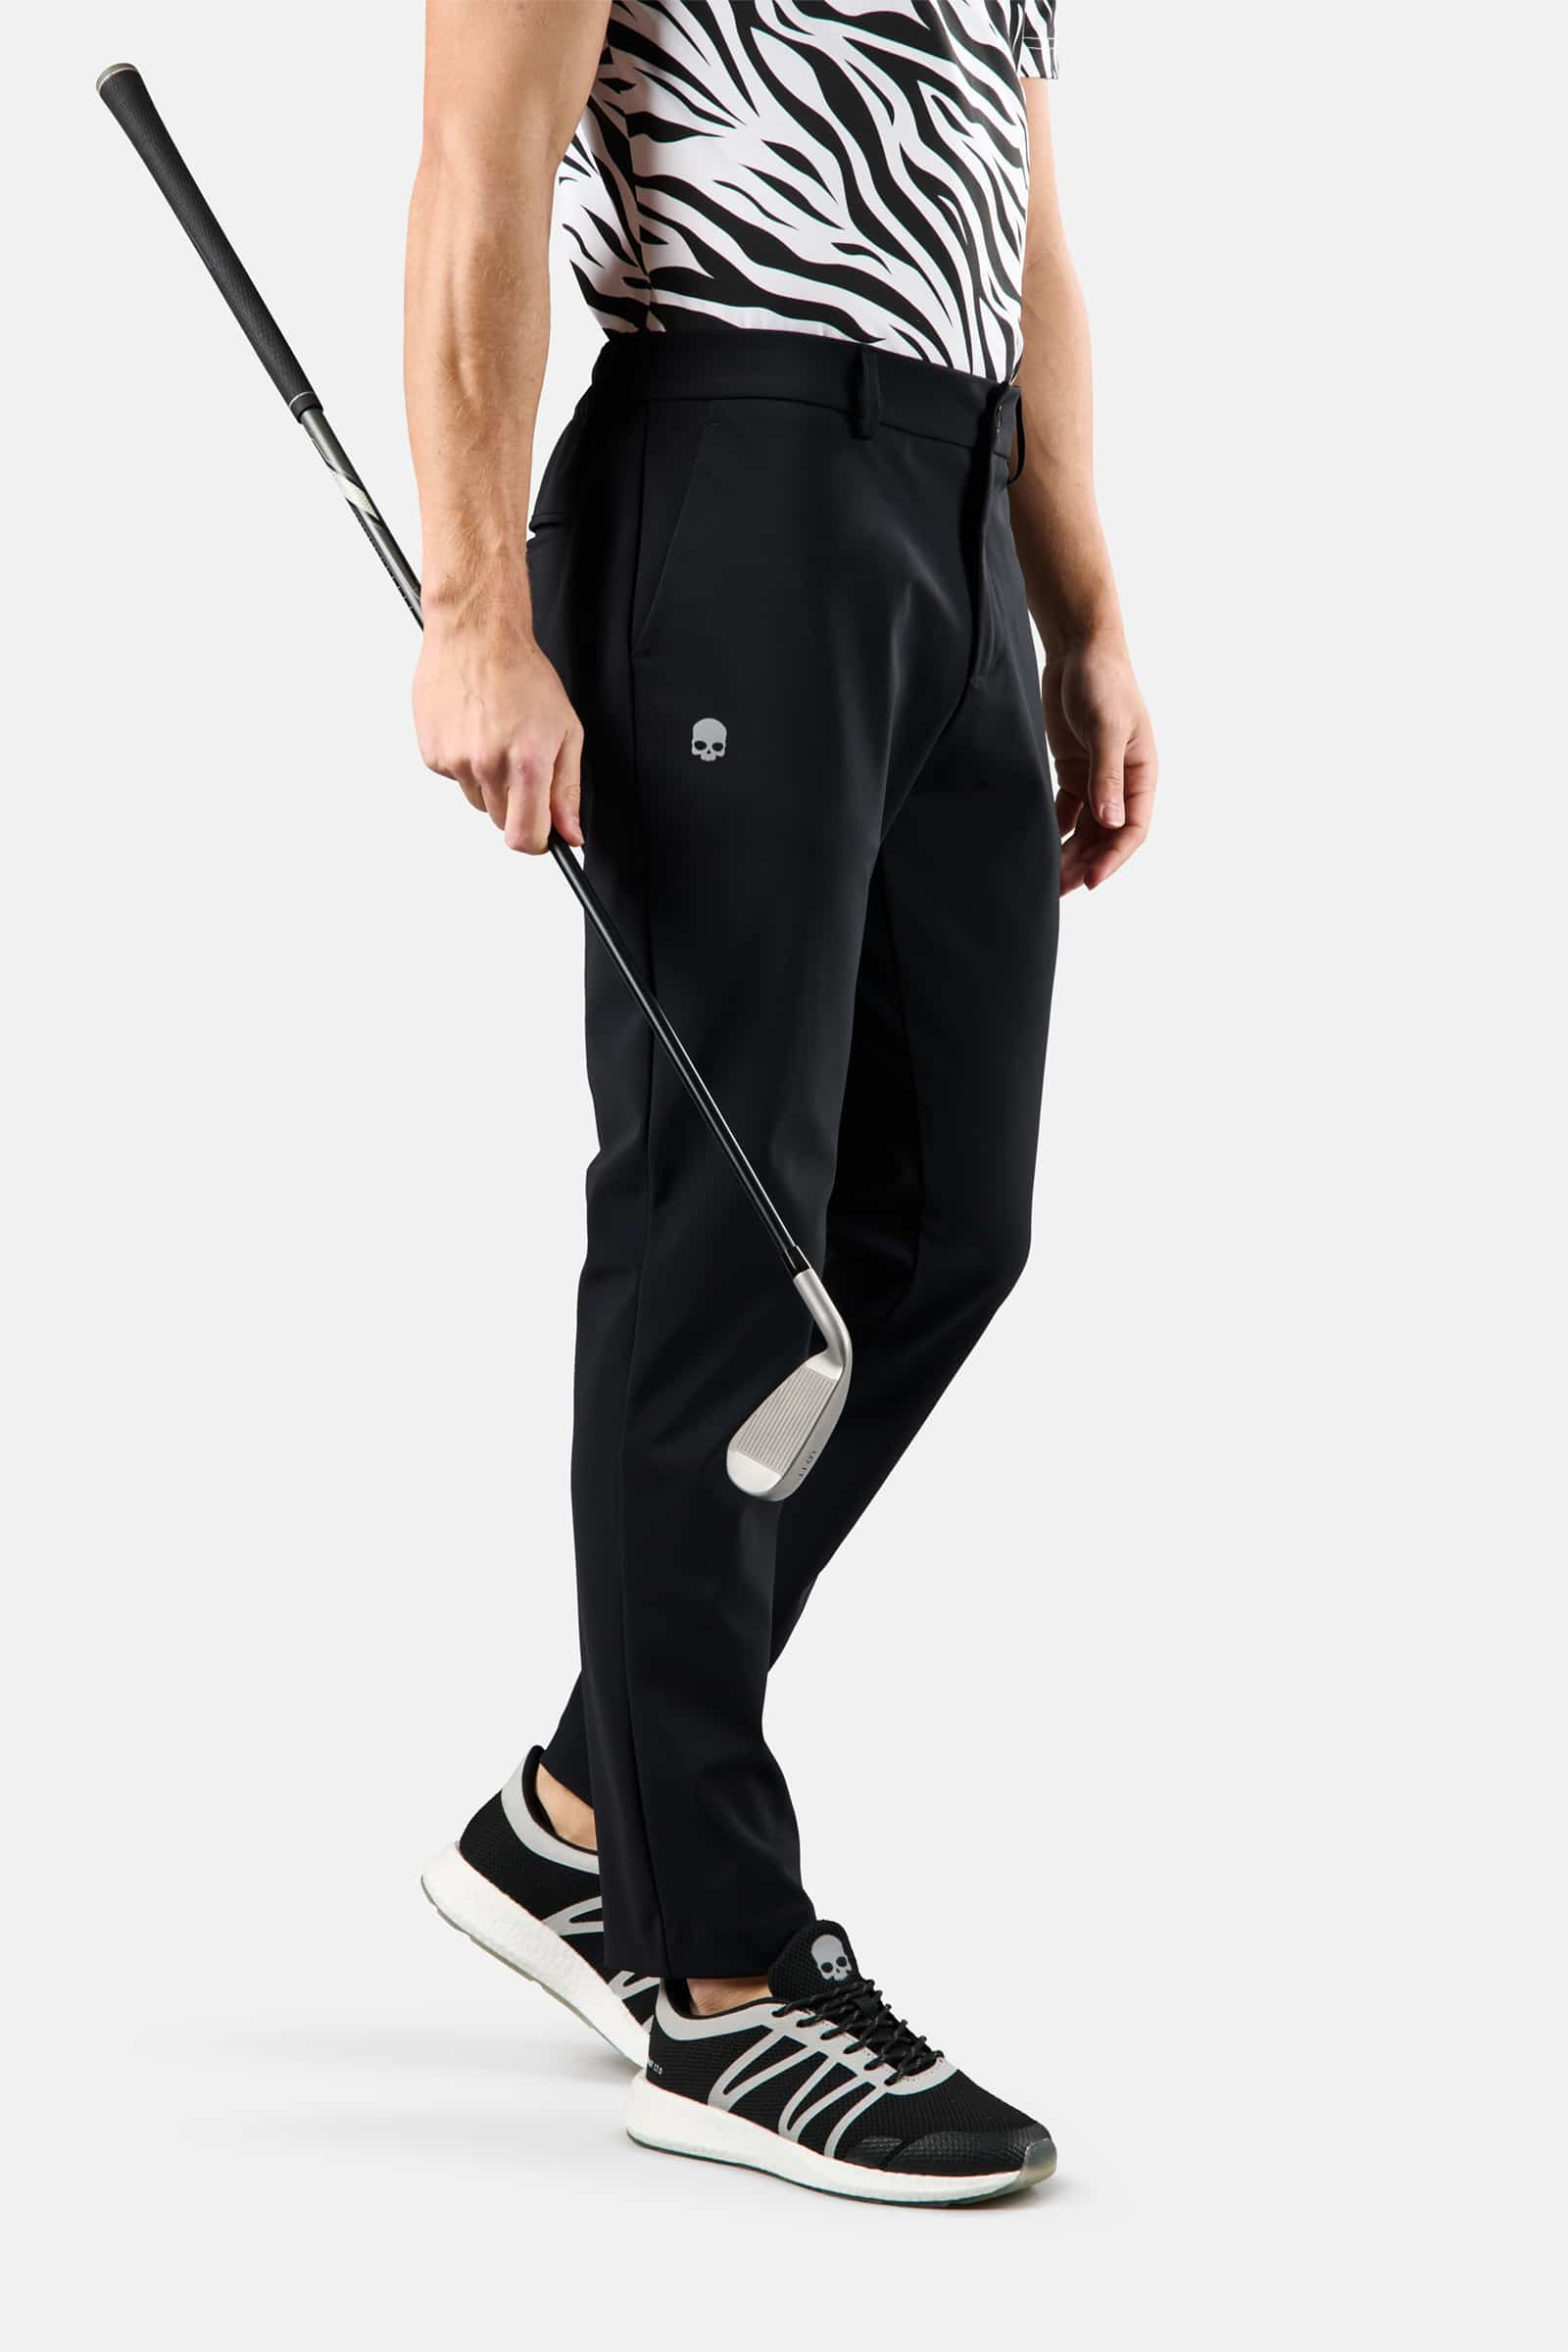 WINTER GOLF TECH PANTS - BLACK - Abbigliamento sportivo | Hydrogen